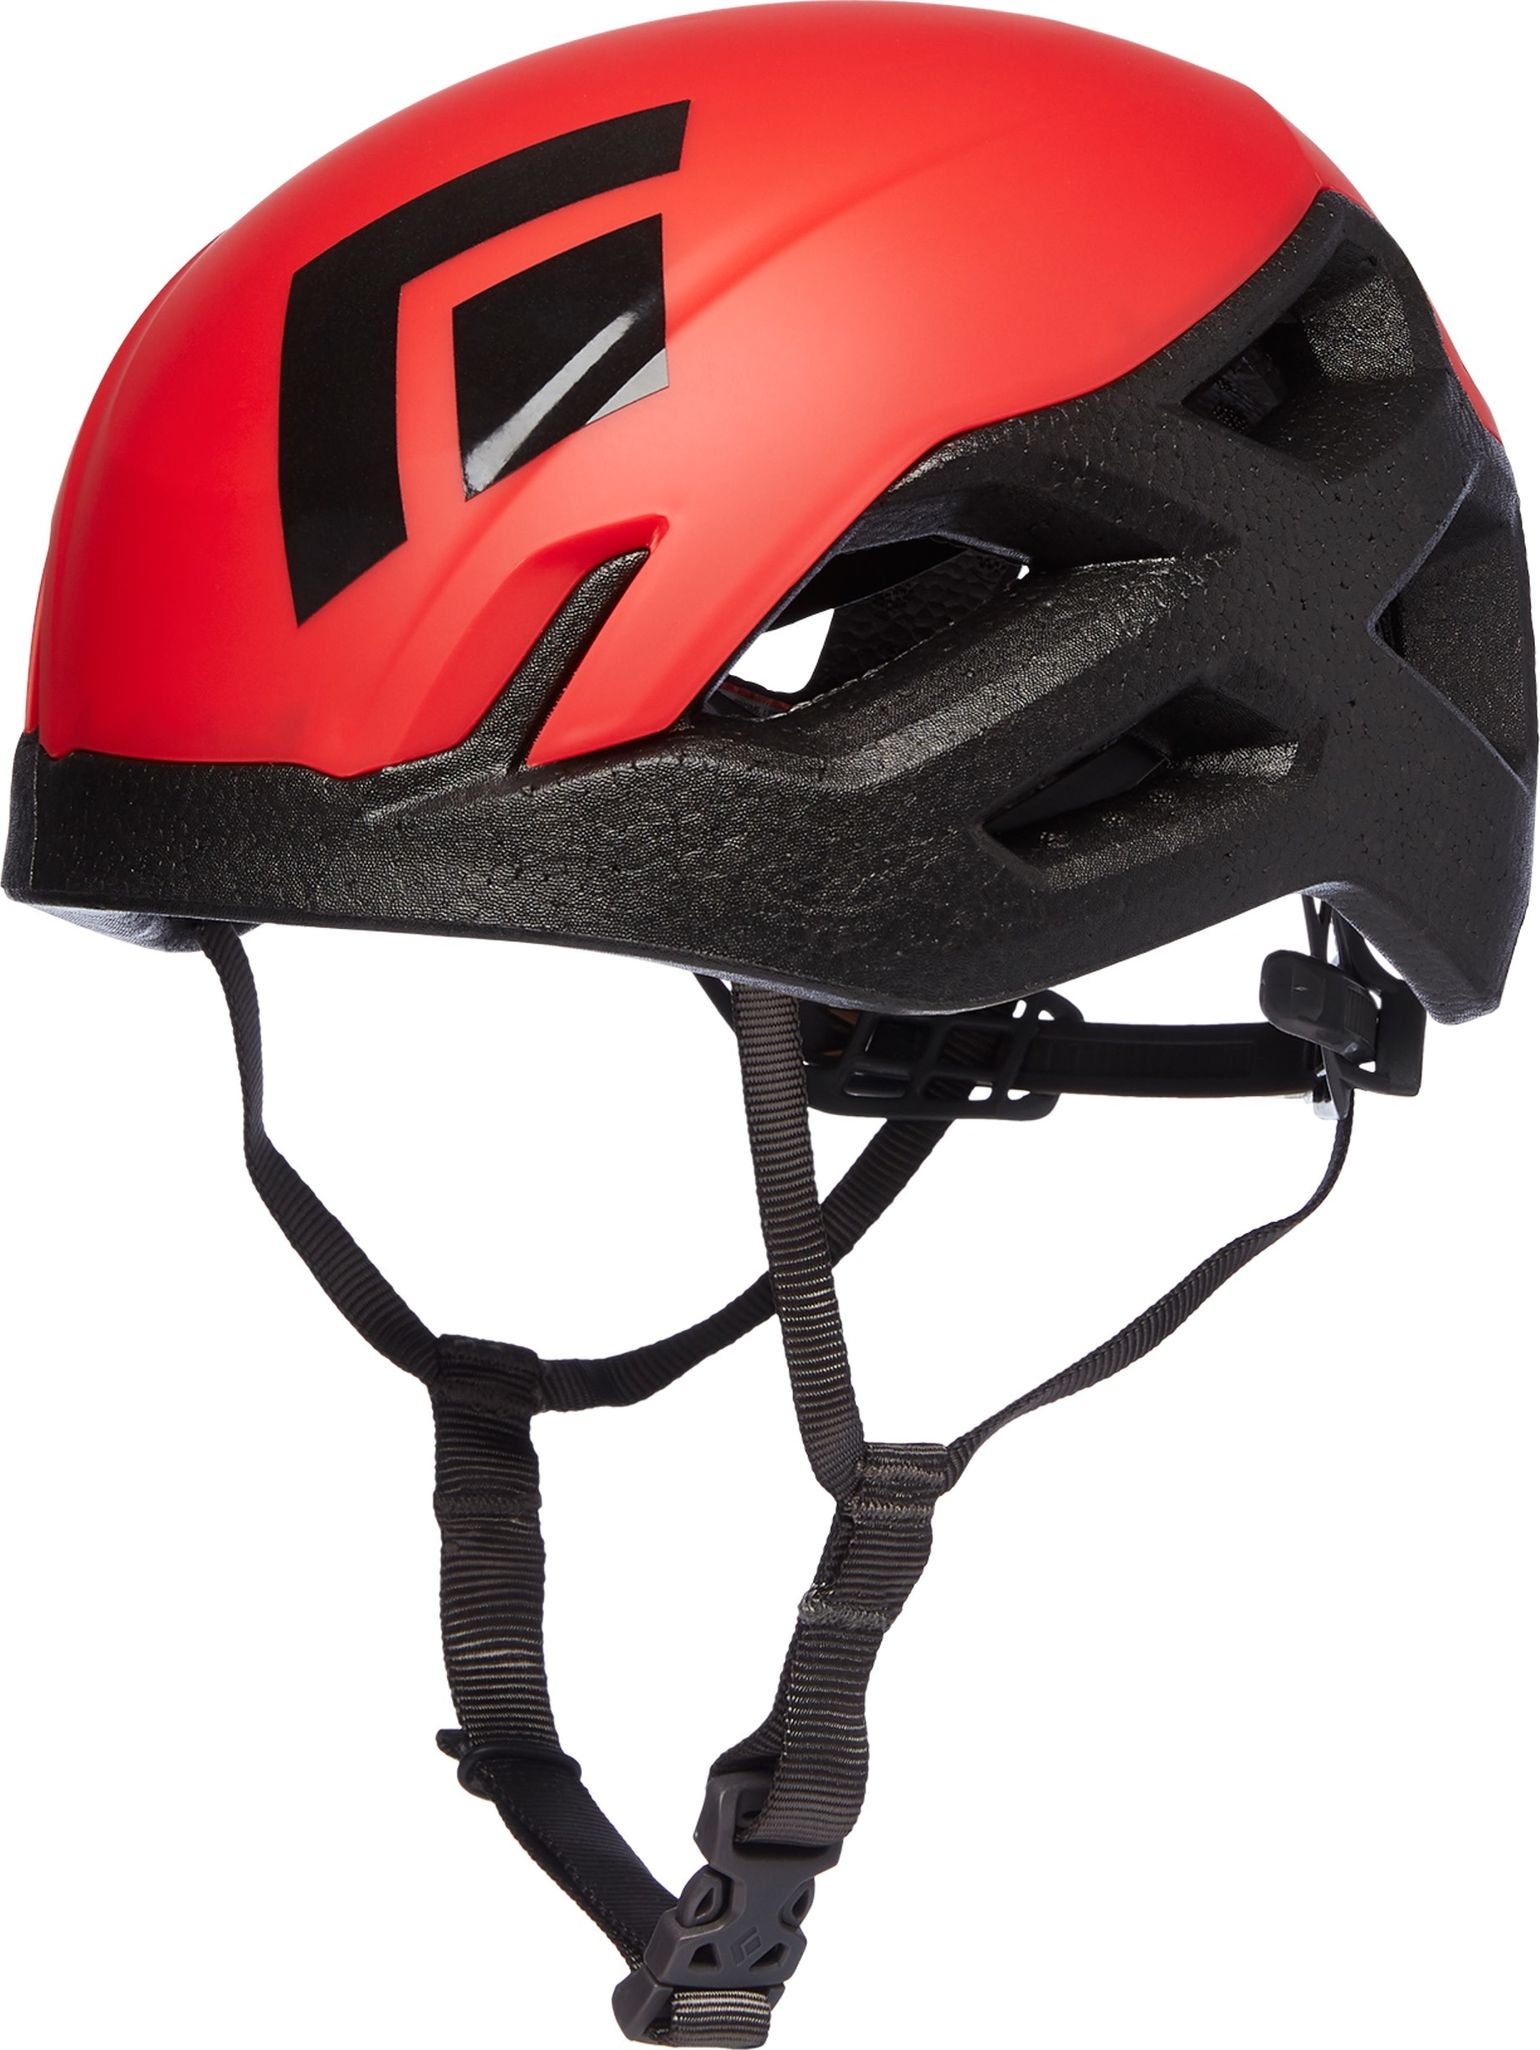 Vision Helmet Hyper Red